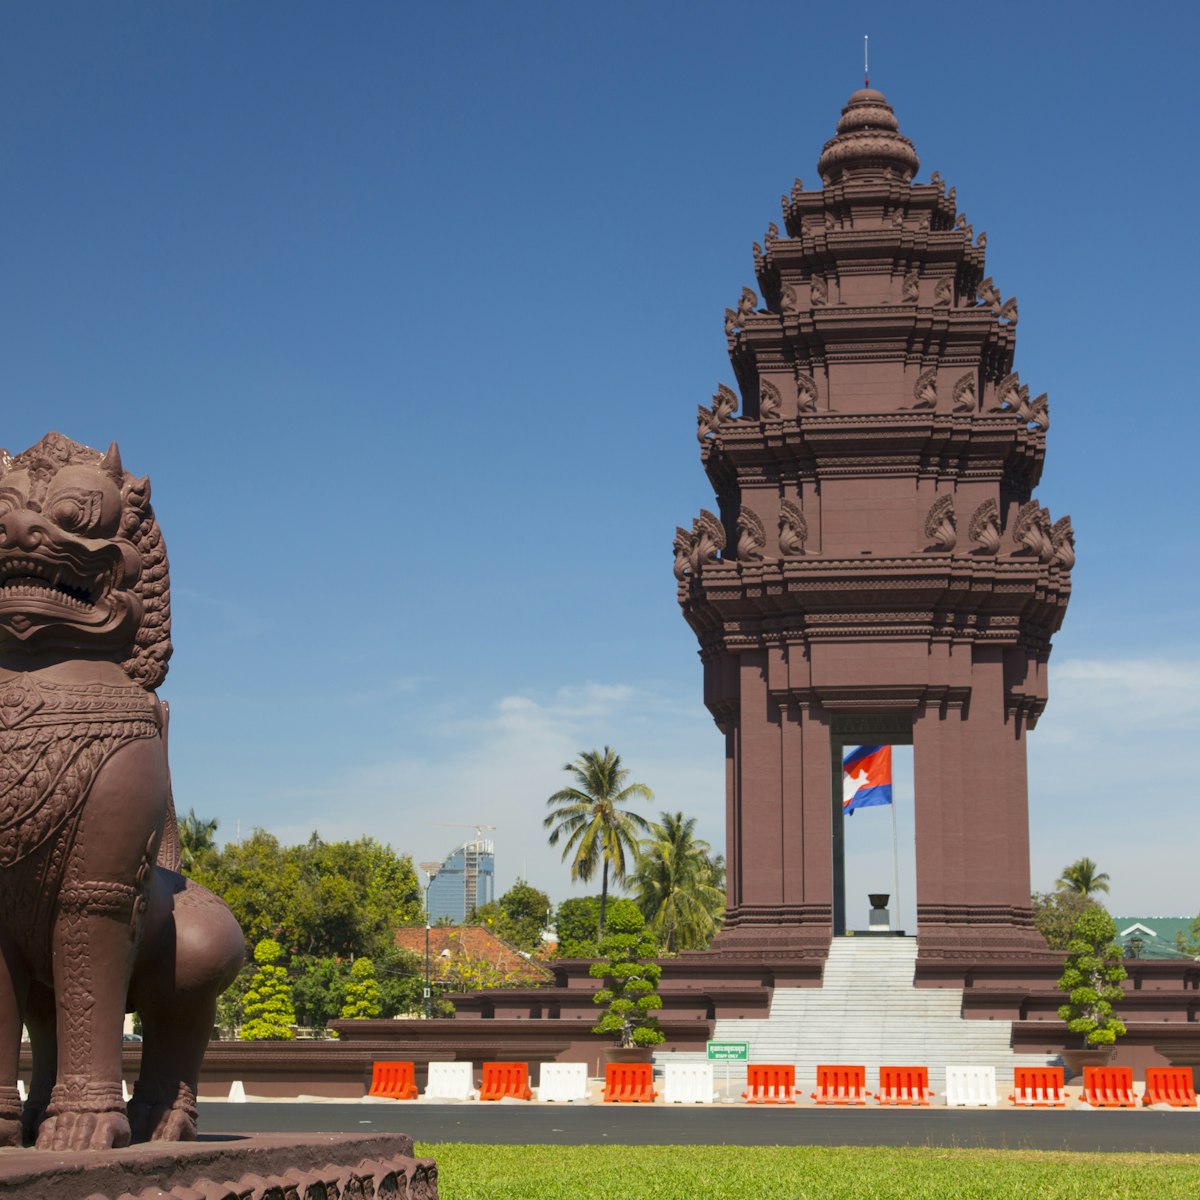 Independence Monument, Phnom Penh